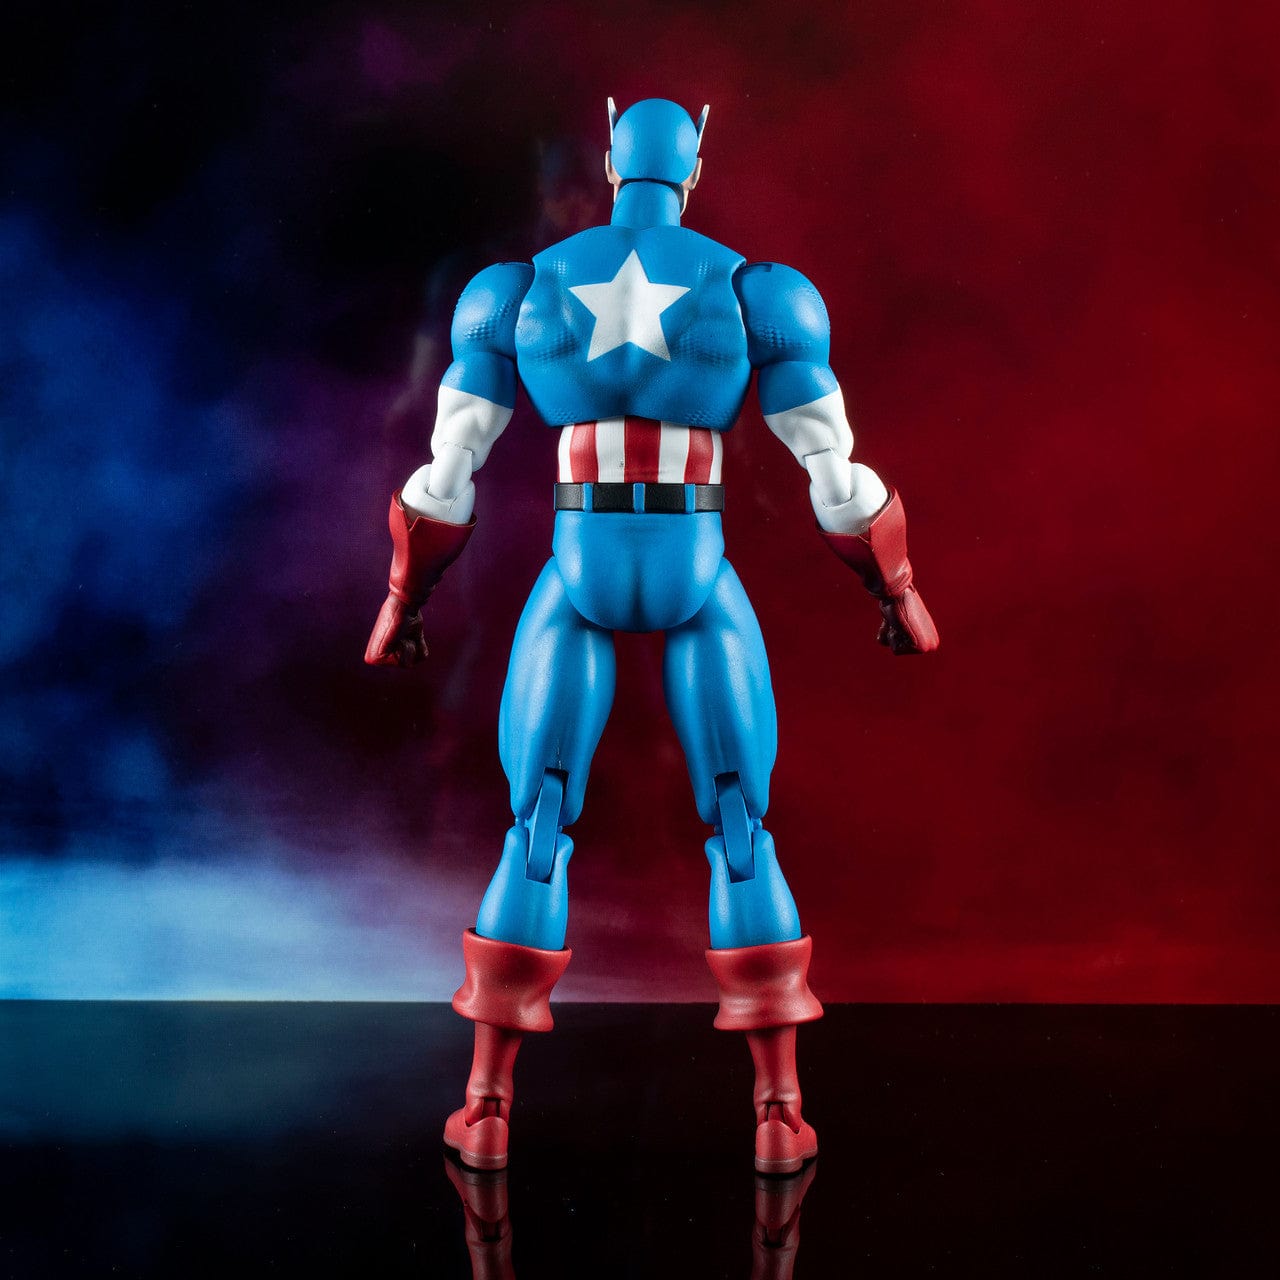 Diamond Select Toys Marvel Select Classic Captain America Action Figure